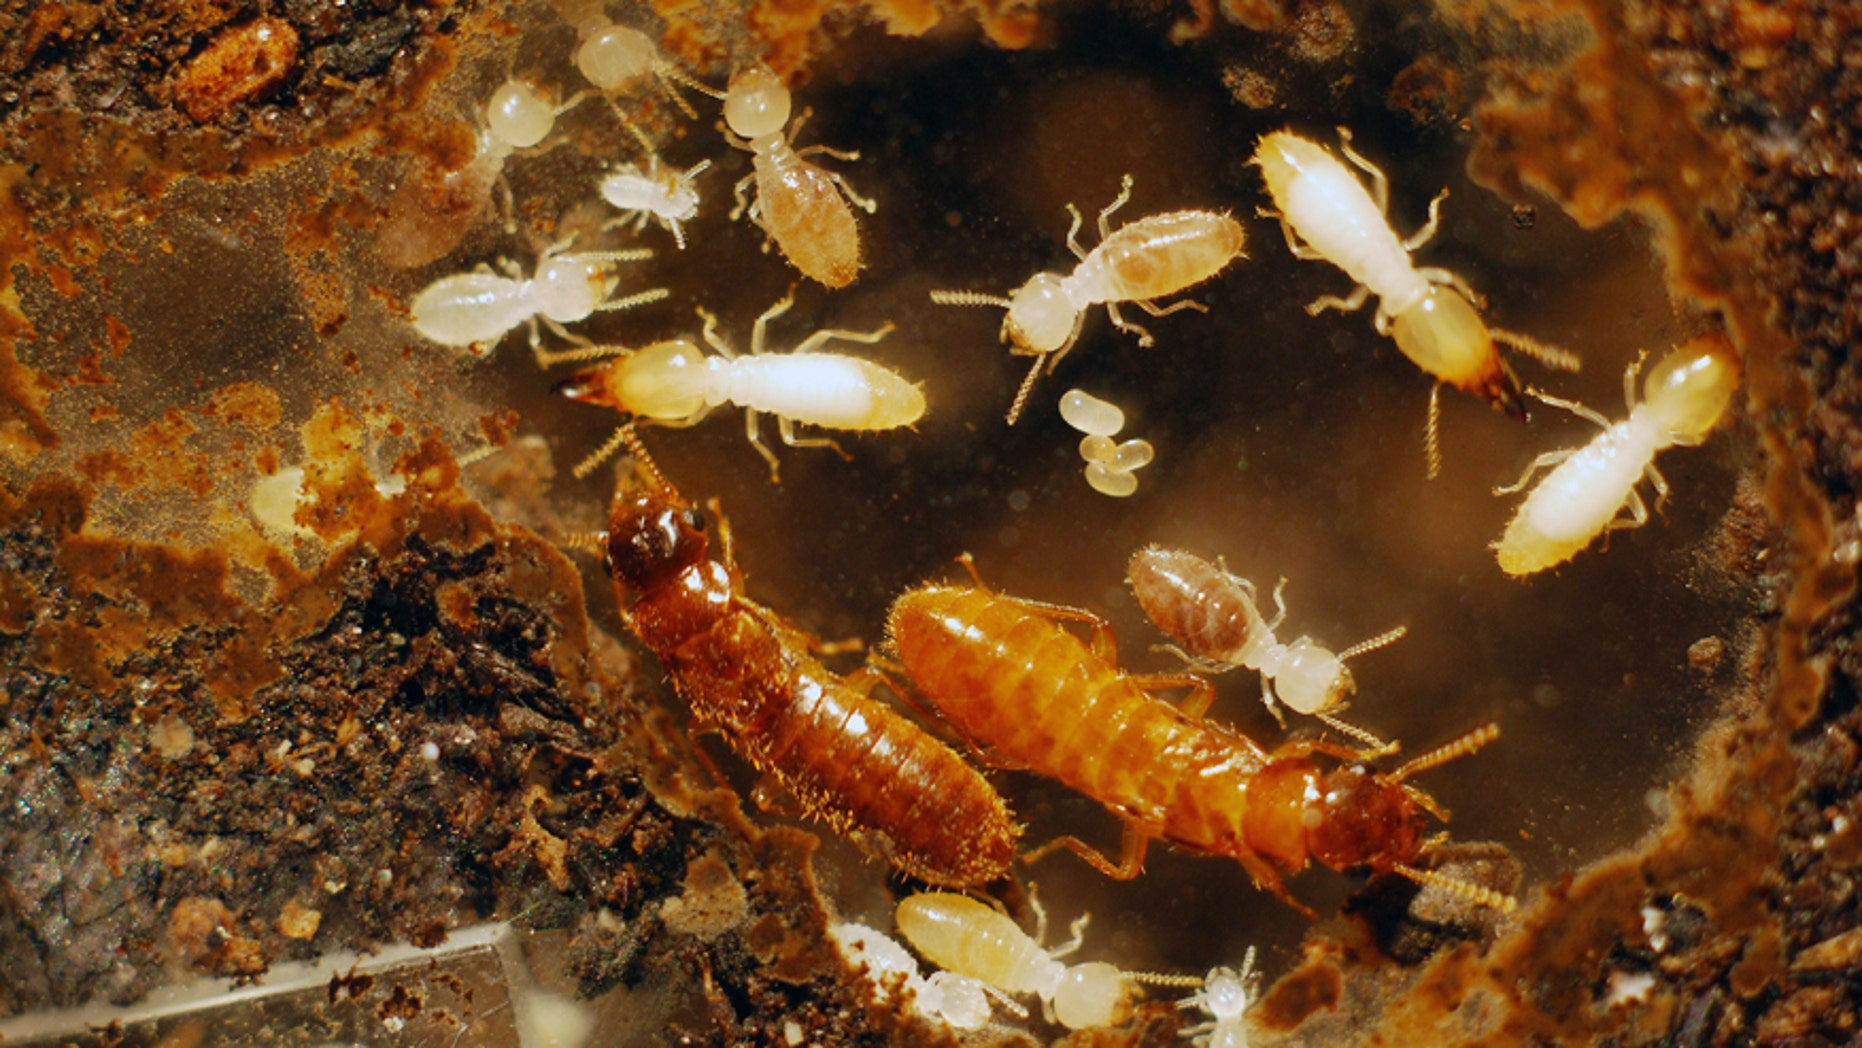 Termite superswarm Threatens South Florida Fox News